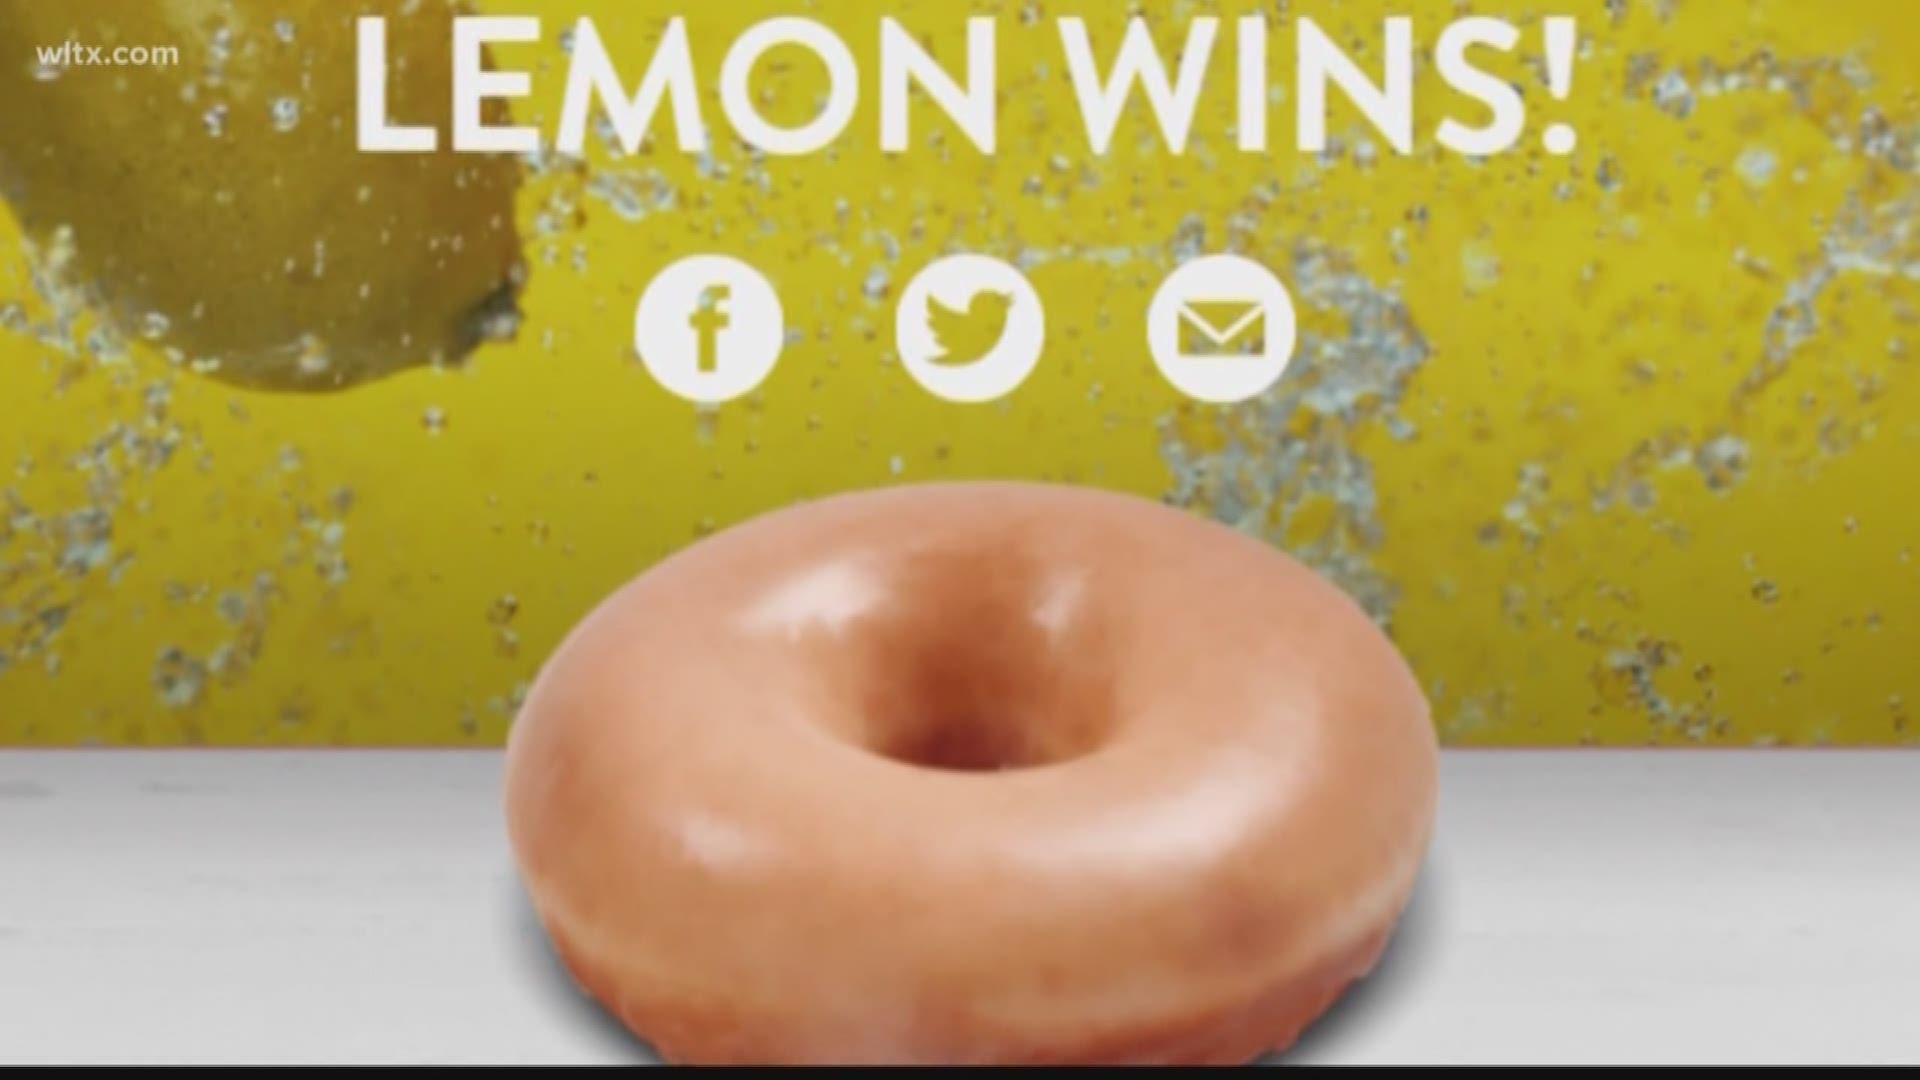 The pastry chain announced a new lemon glazed doughnut.